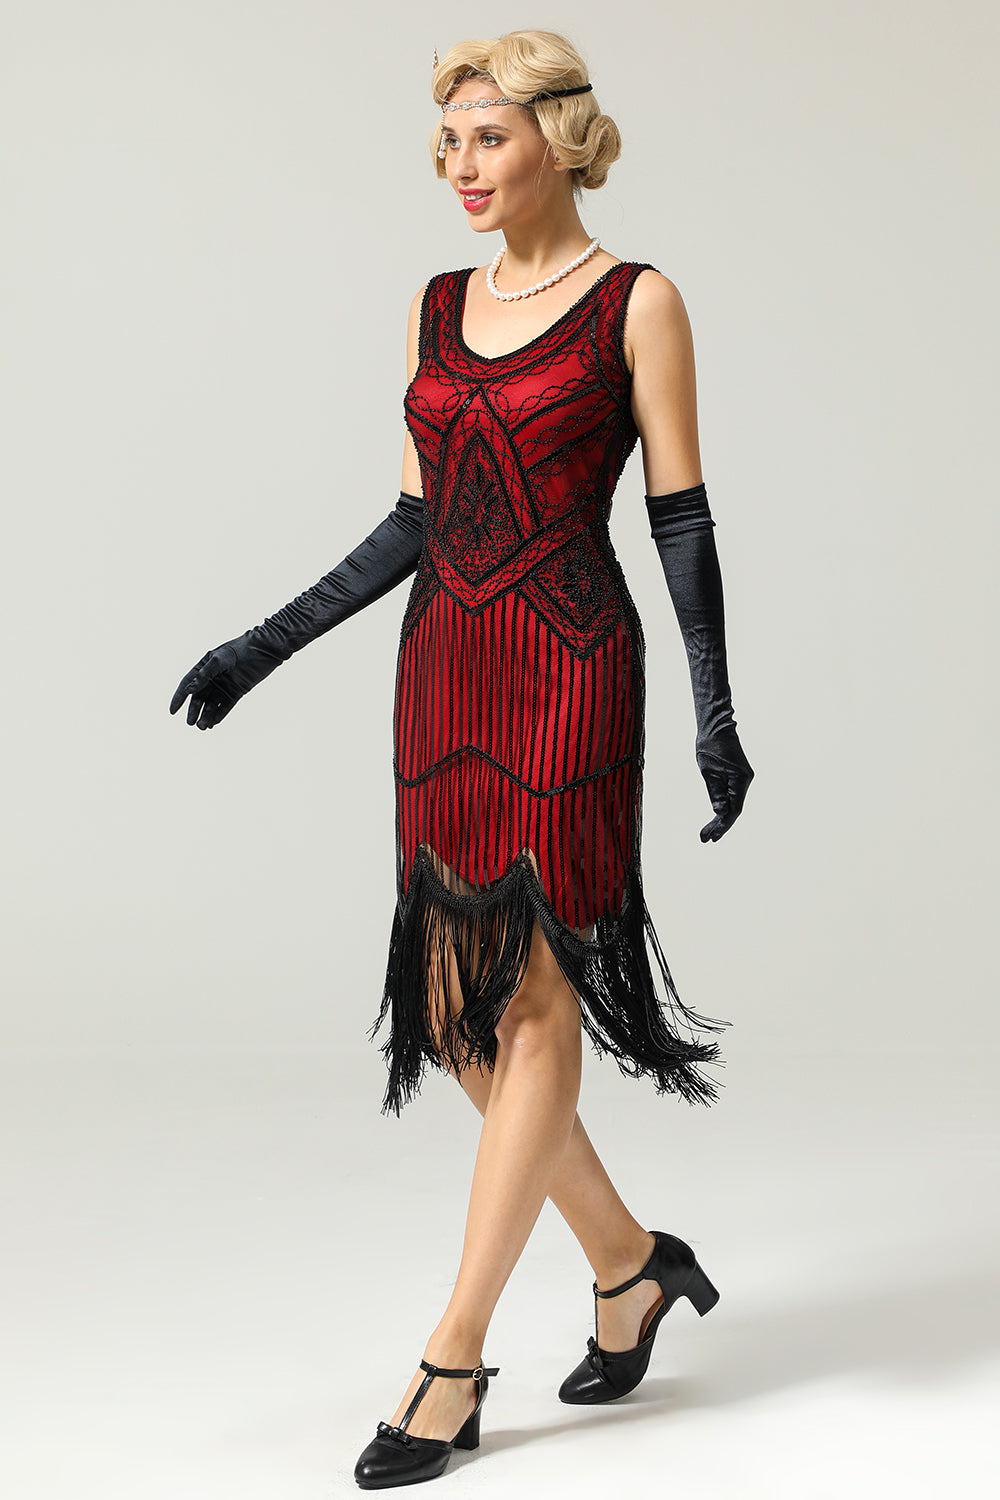 Zapaka Women 1920s Dress V Neck Red and Black Sequined Glitter Flapper ...